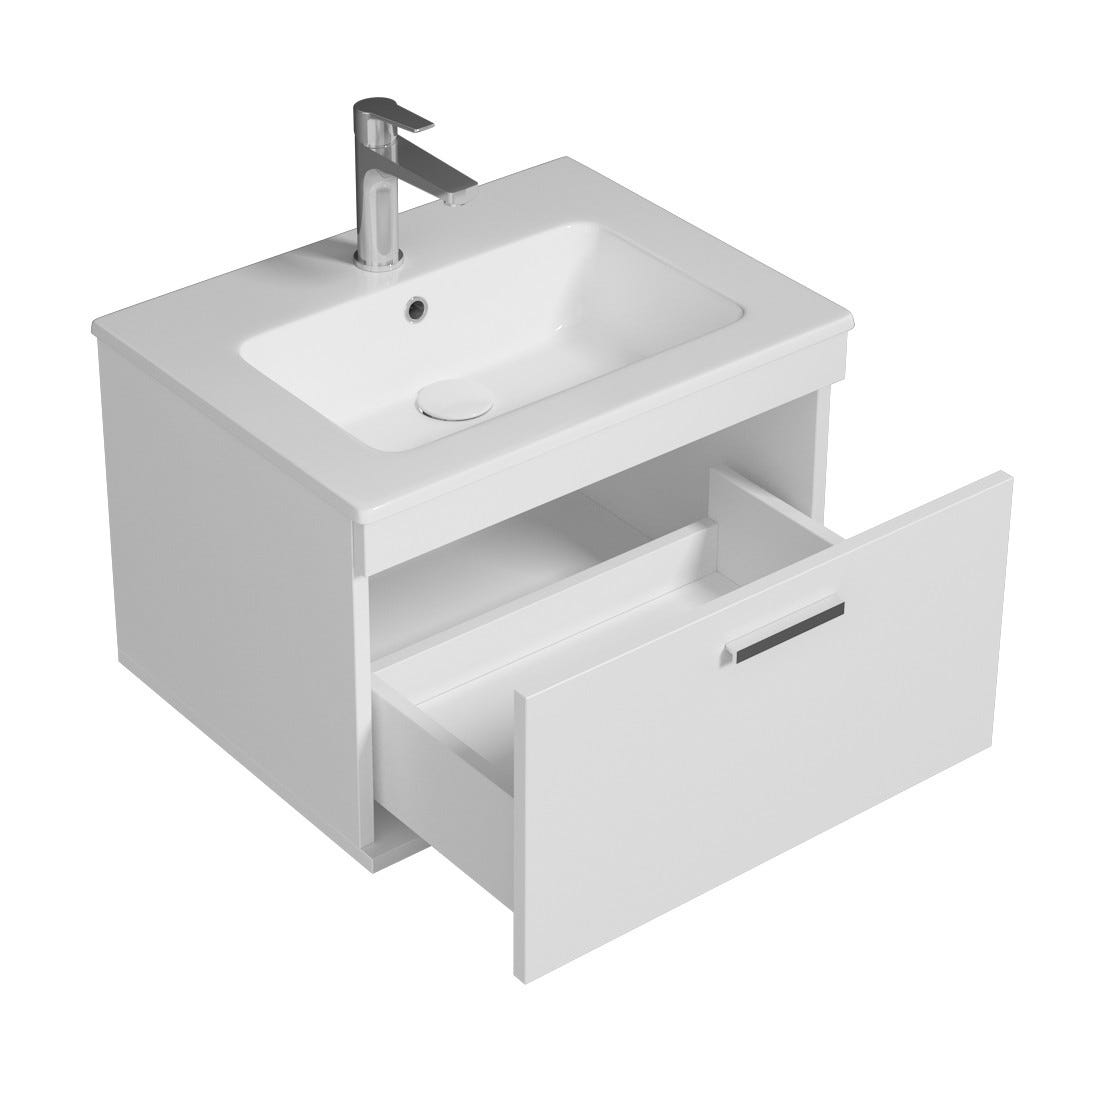 RUBITE Meuble salle de bain simple vasque 1 tiroir blanc largeur 60 cm 2